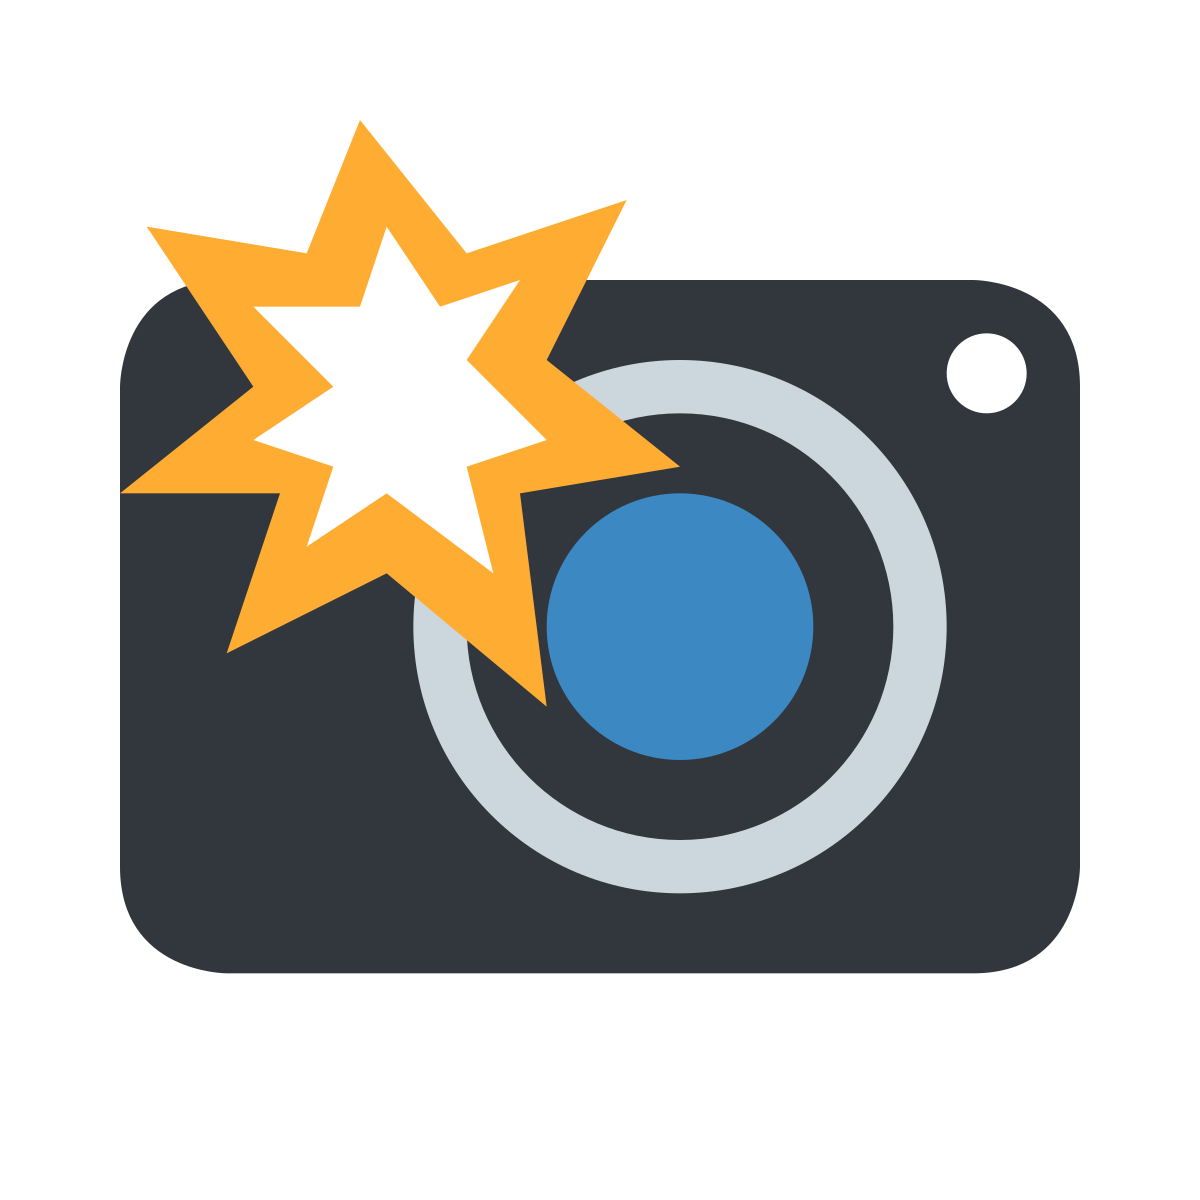 Camera With Flash Emoji - What Emoji 類